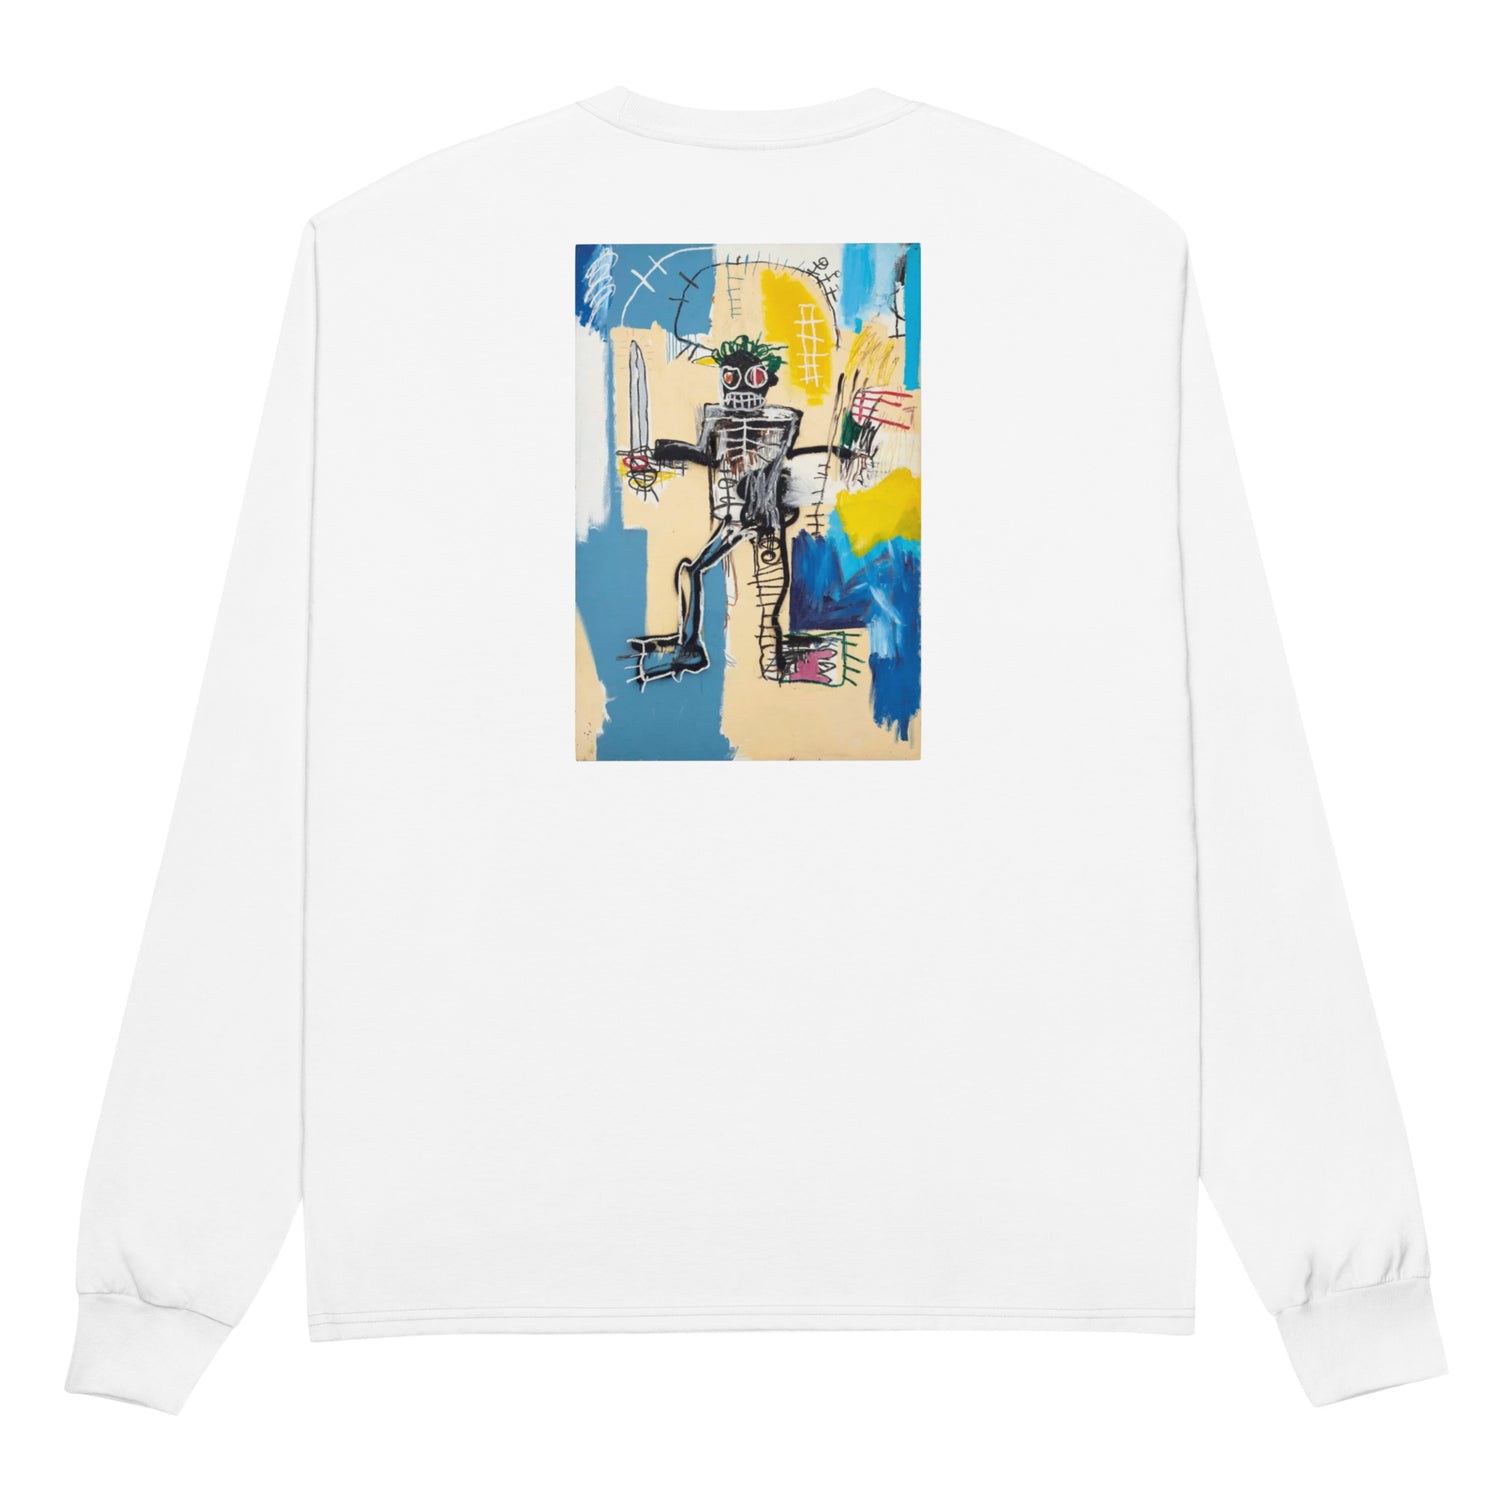 Jean-Michel Basquiat "Warrior" Artwork Embroidered + Printed Premium Champion Streetwear Long Sleeve Shirt White